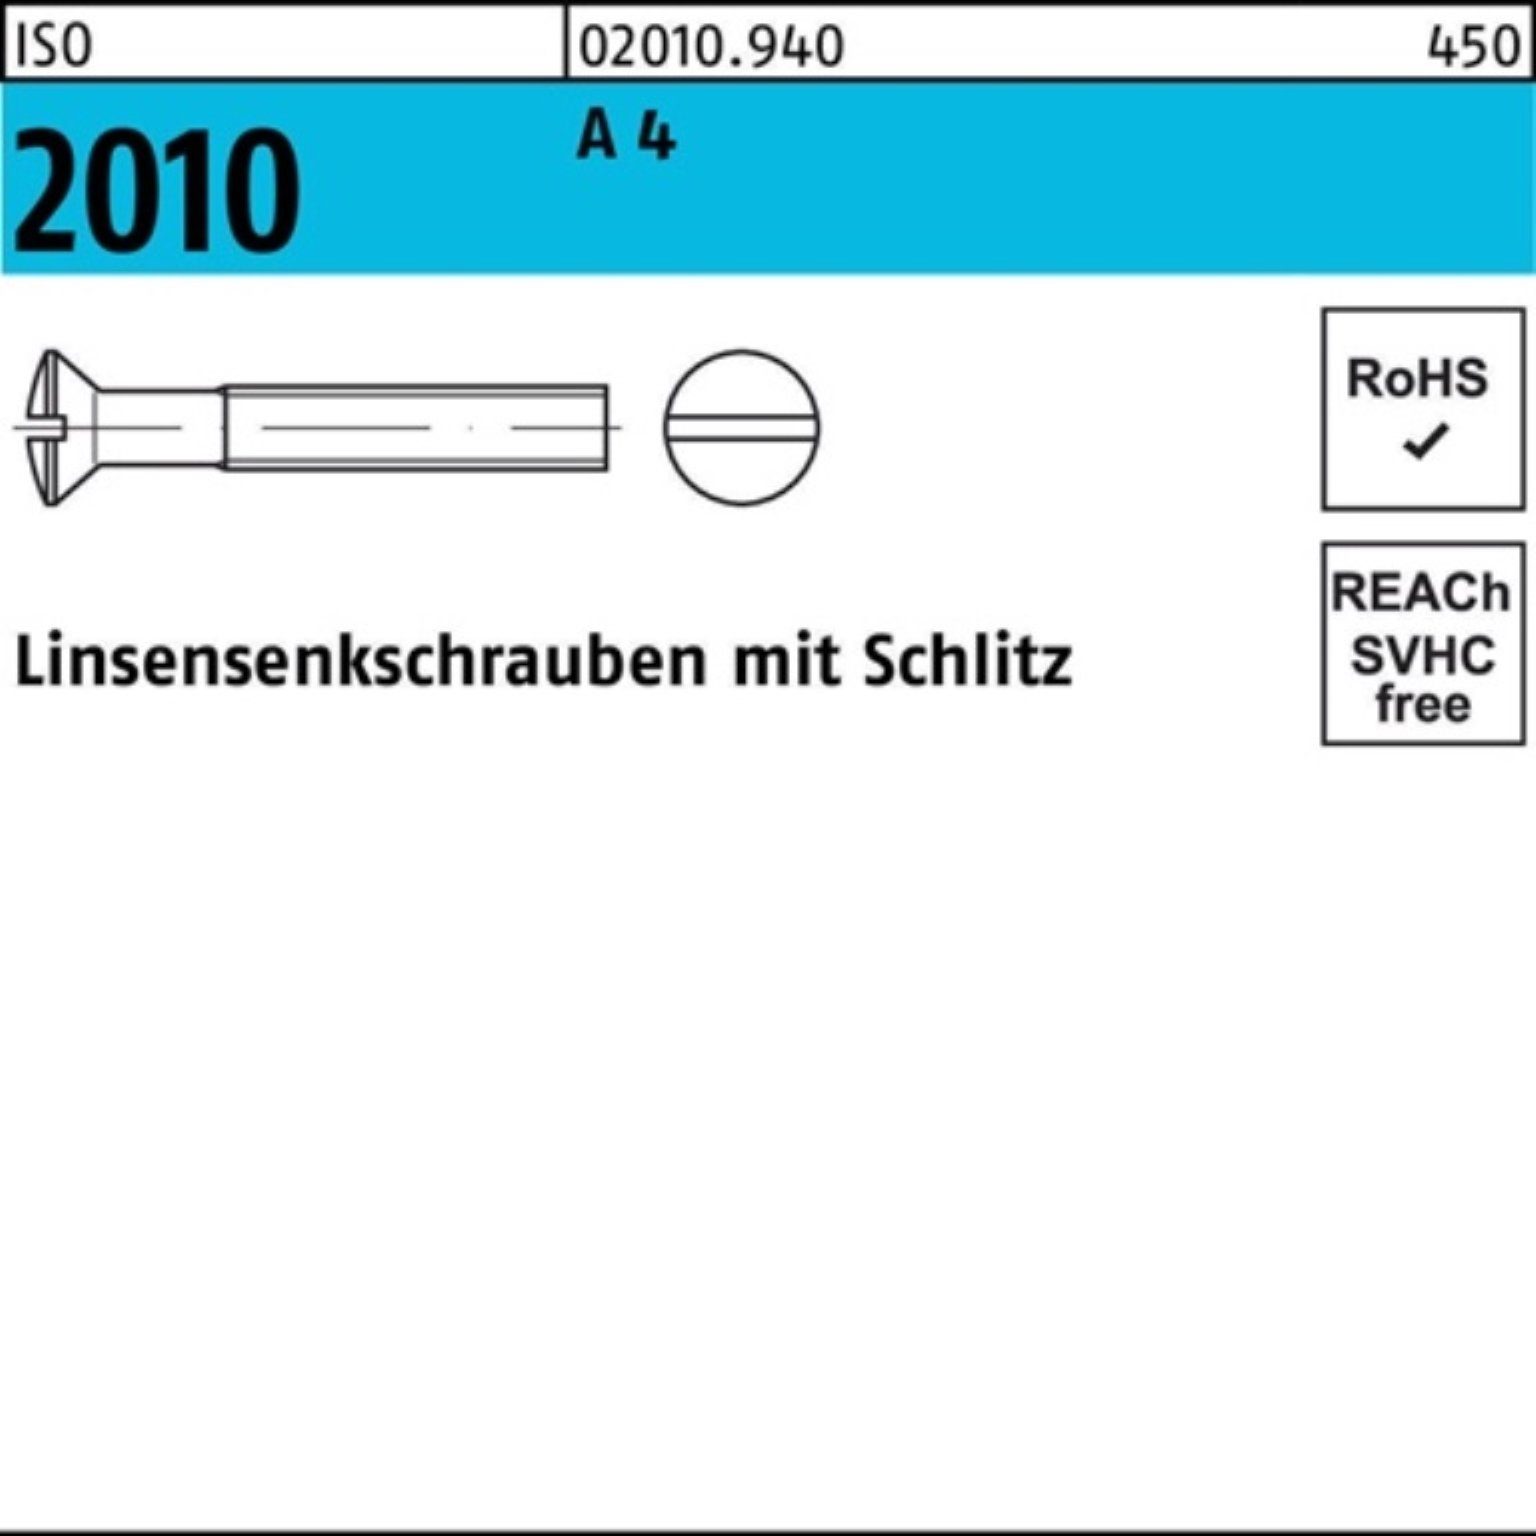 Reyher Linsenschraube Schlitz 2010 Pack M3x 4 ISO A 25 I Stück 200 Linsensenkschraube 200er